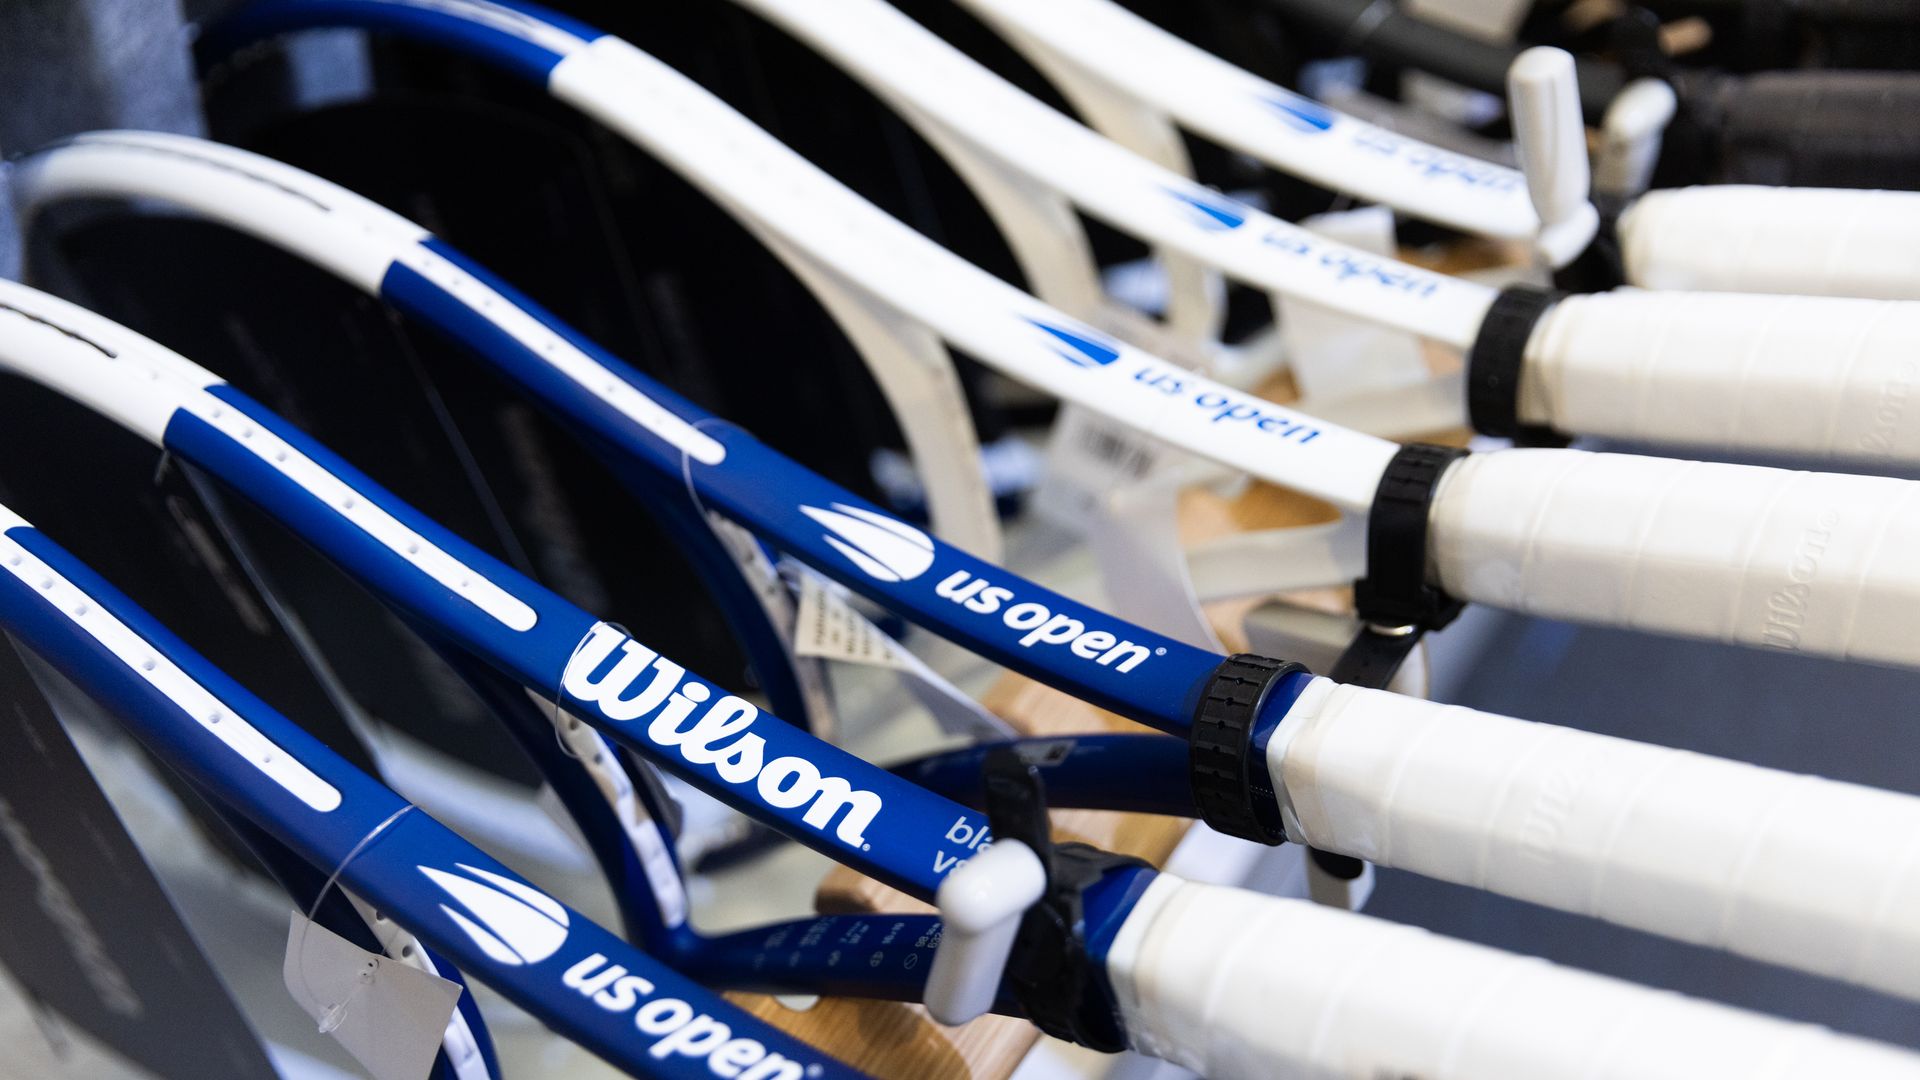 Wilson logos on tennis rackets at Paragon Sports store